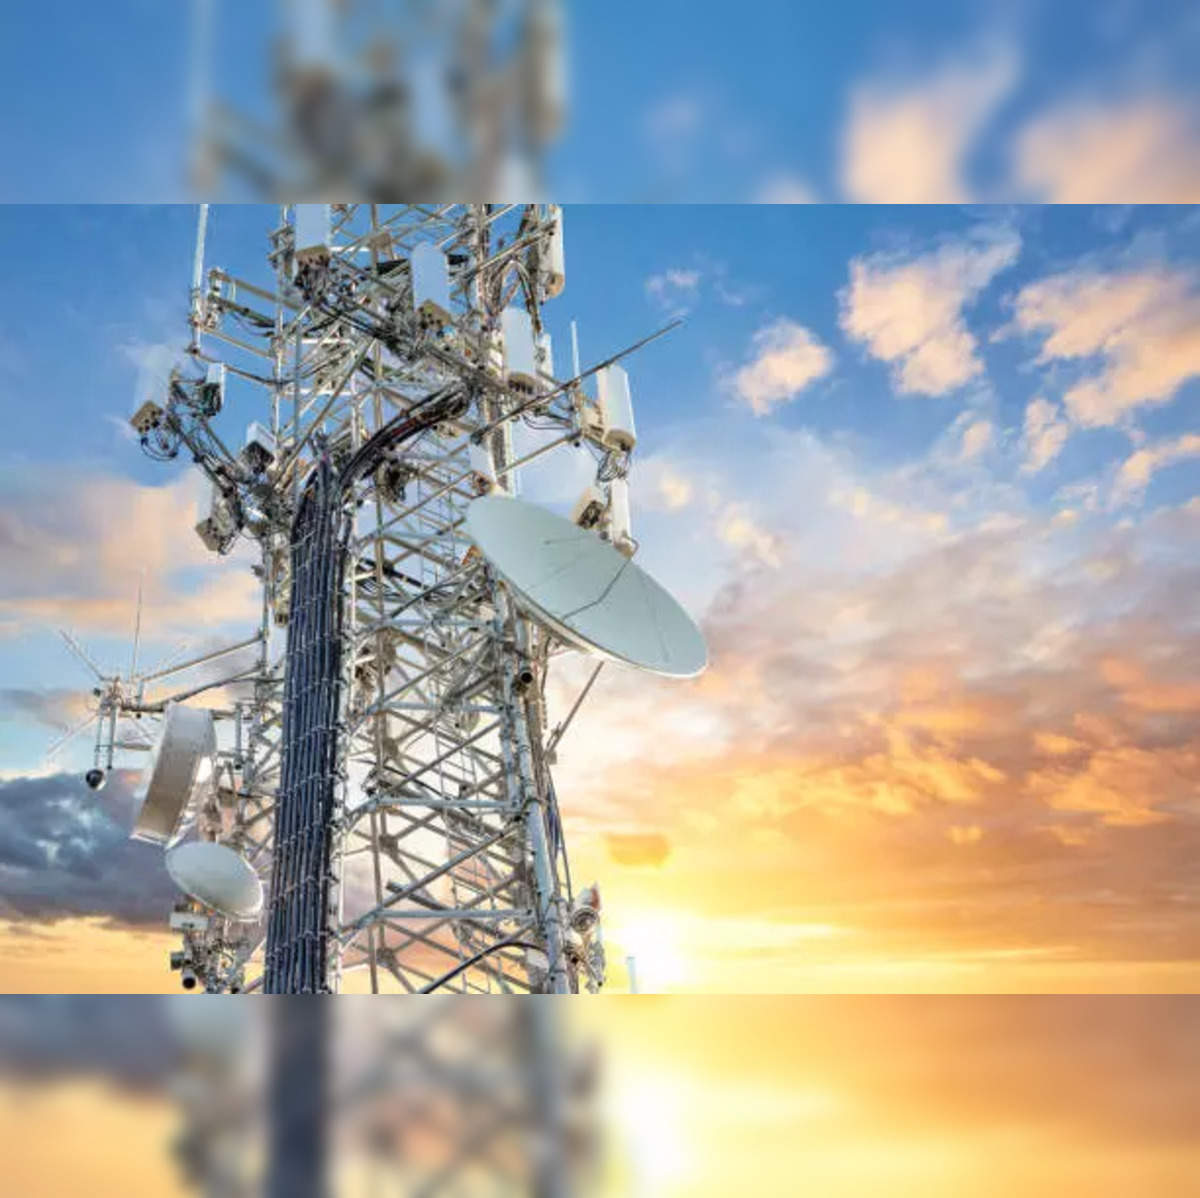 tatas nelco seeks to offer satellite broadband services